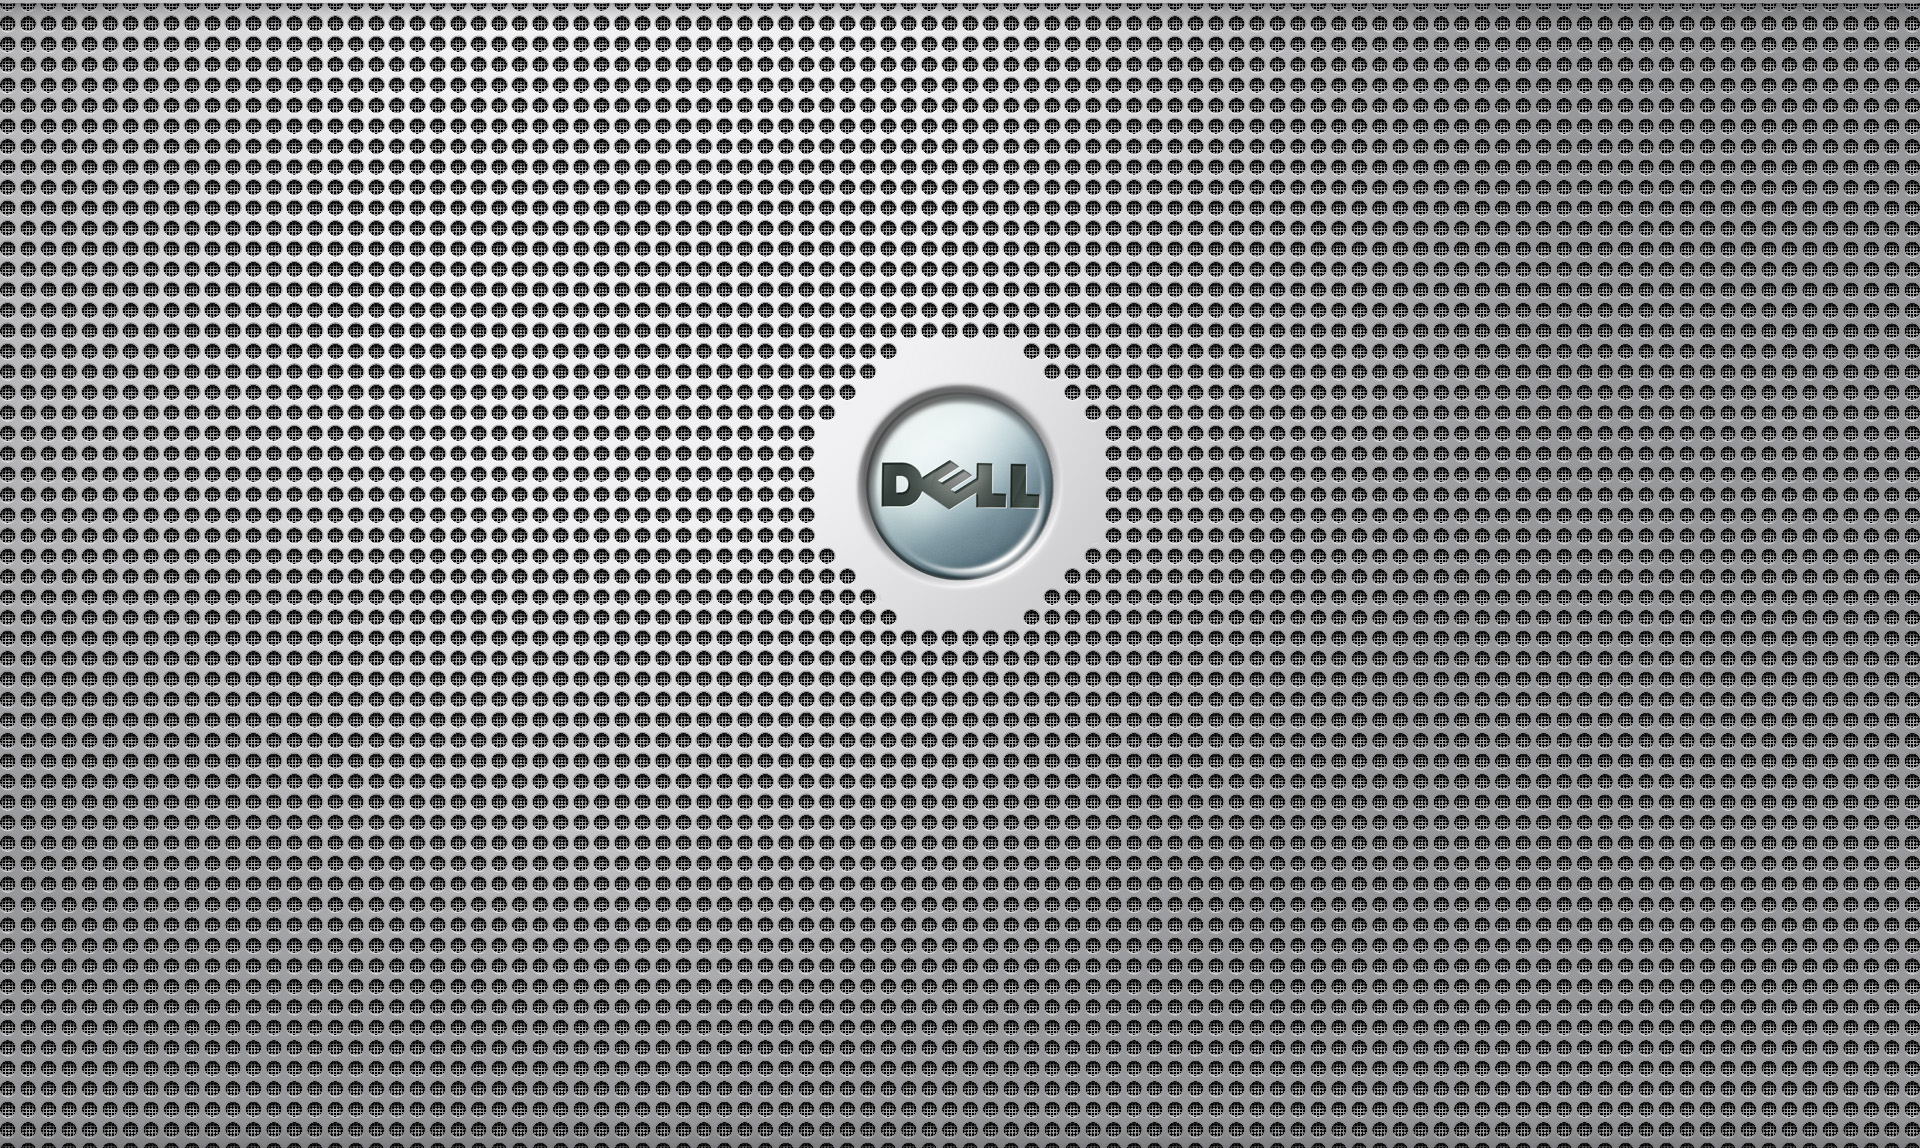 Dell Logo Wallpapers Pixelstalk Net